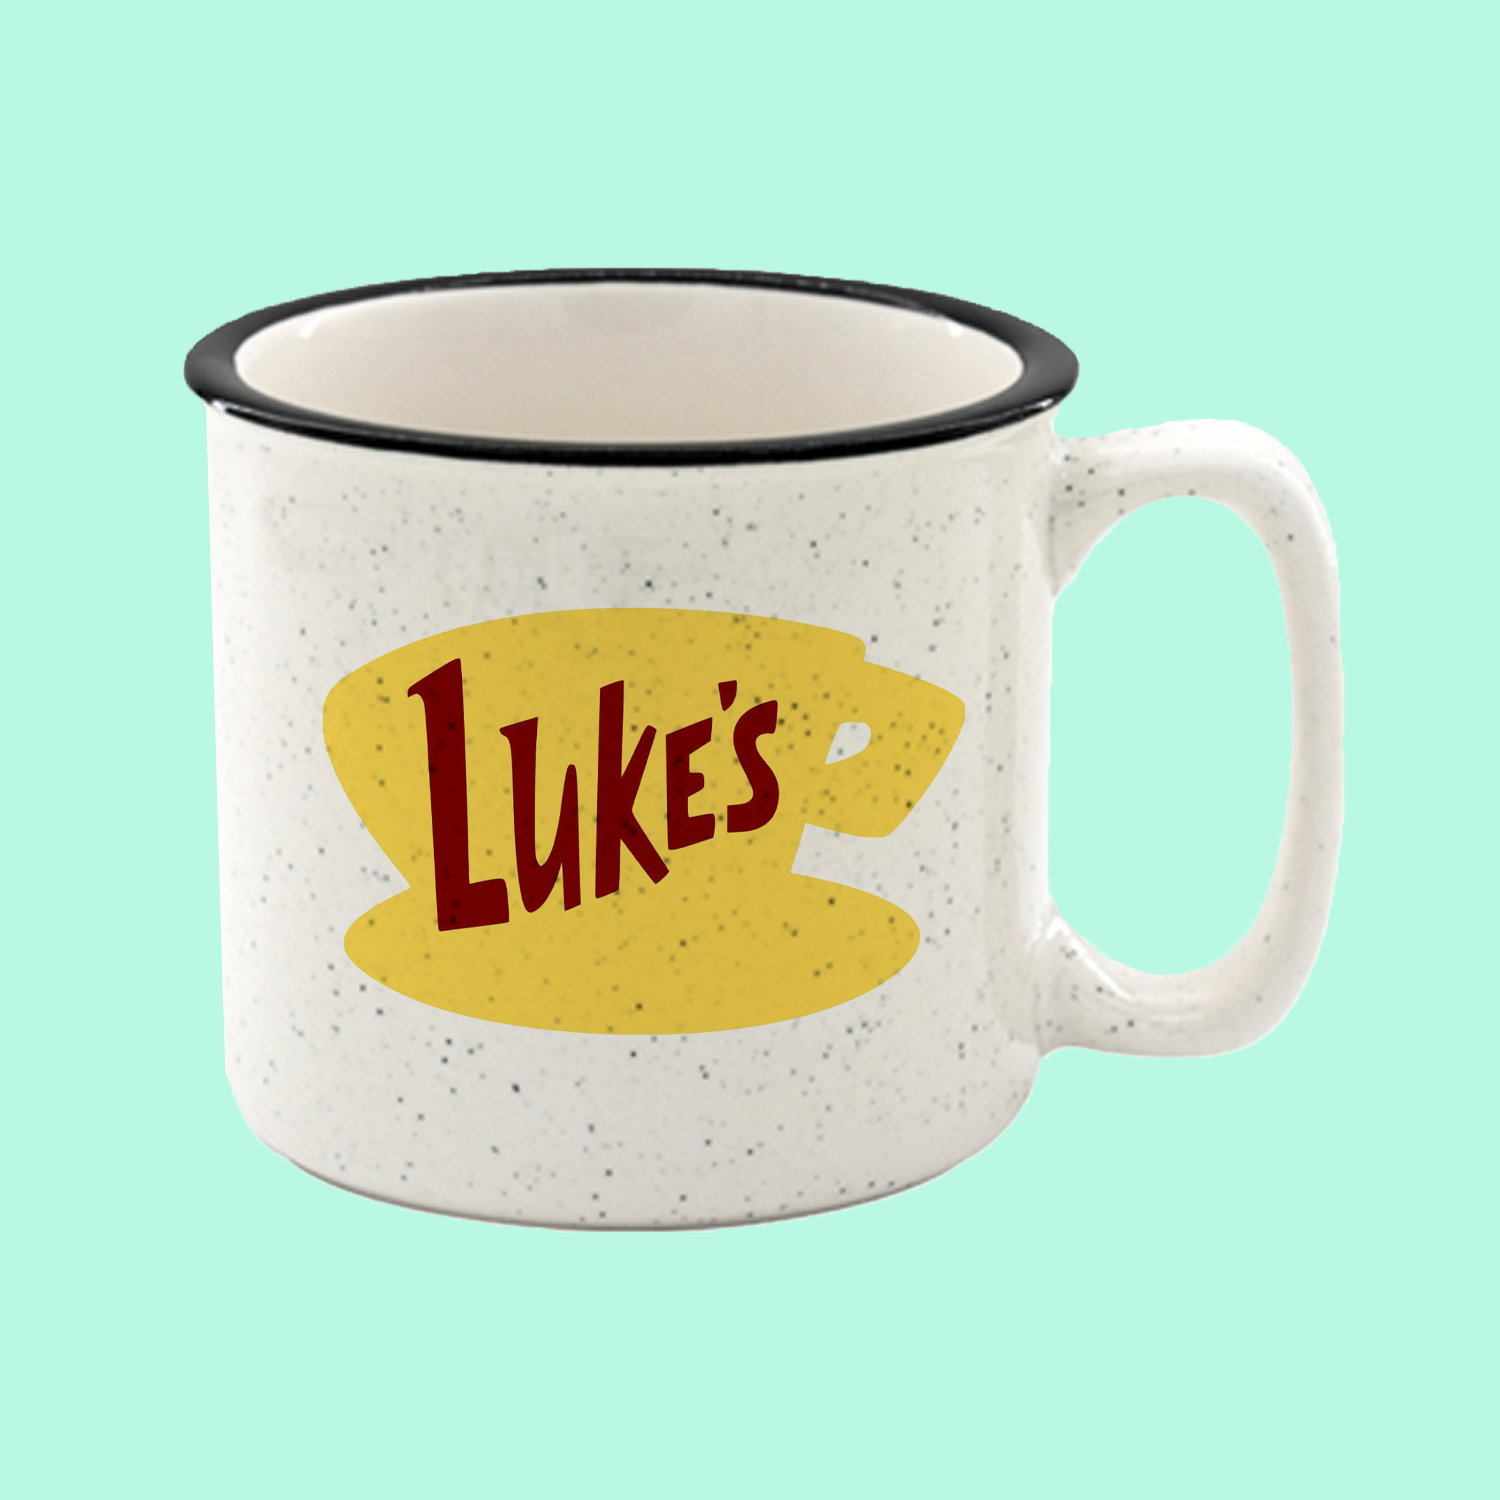 Luke's